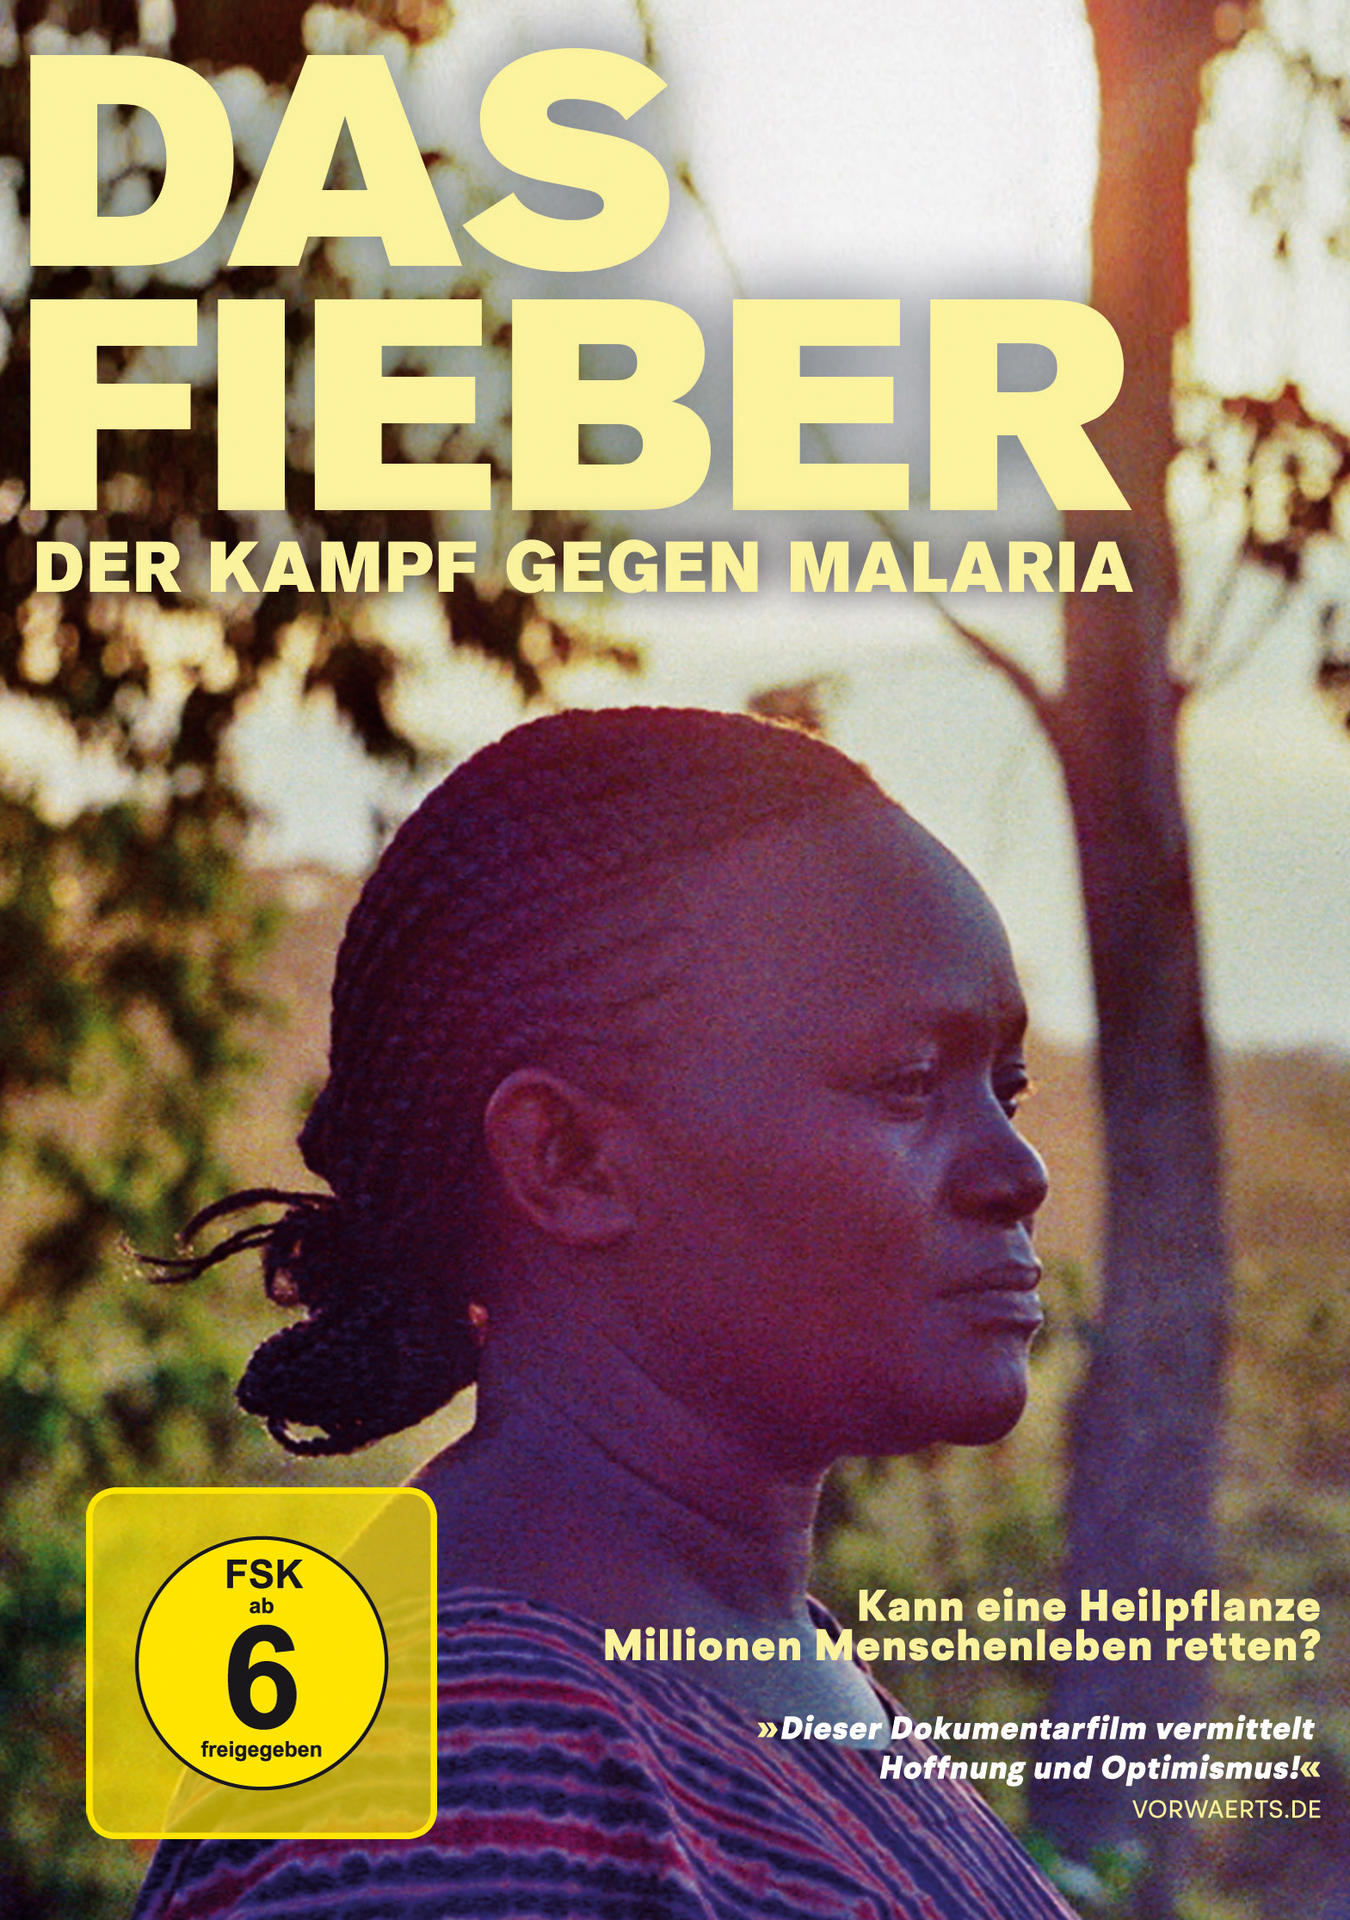 Kampf Malaria gegen Der - Das Fieber DVD